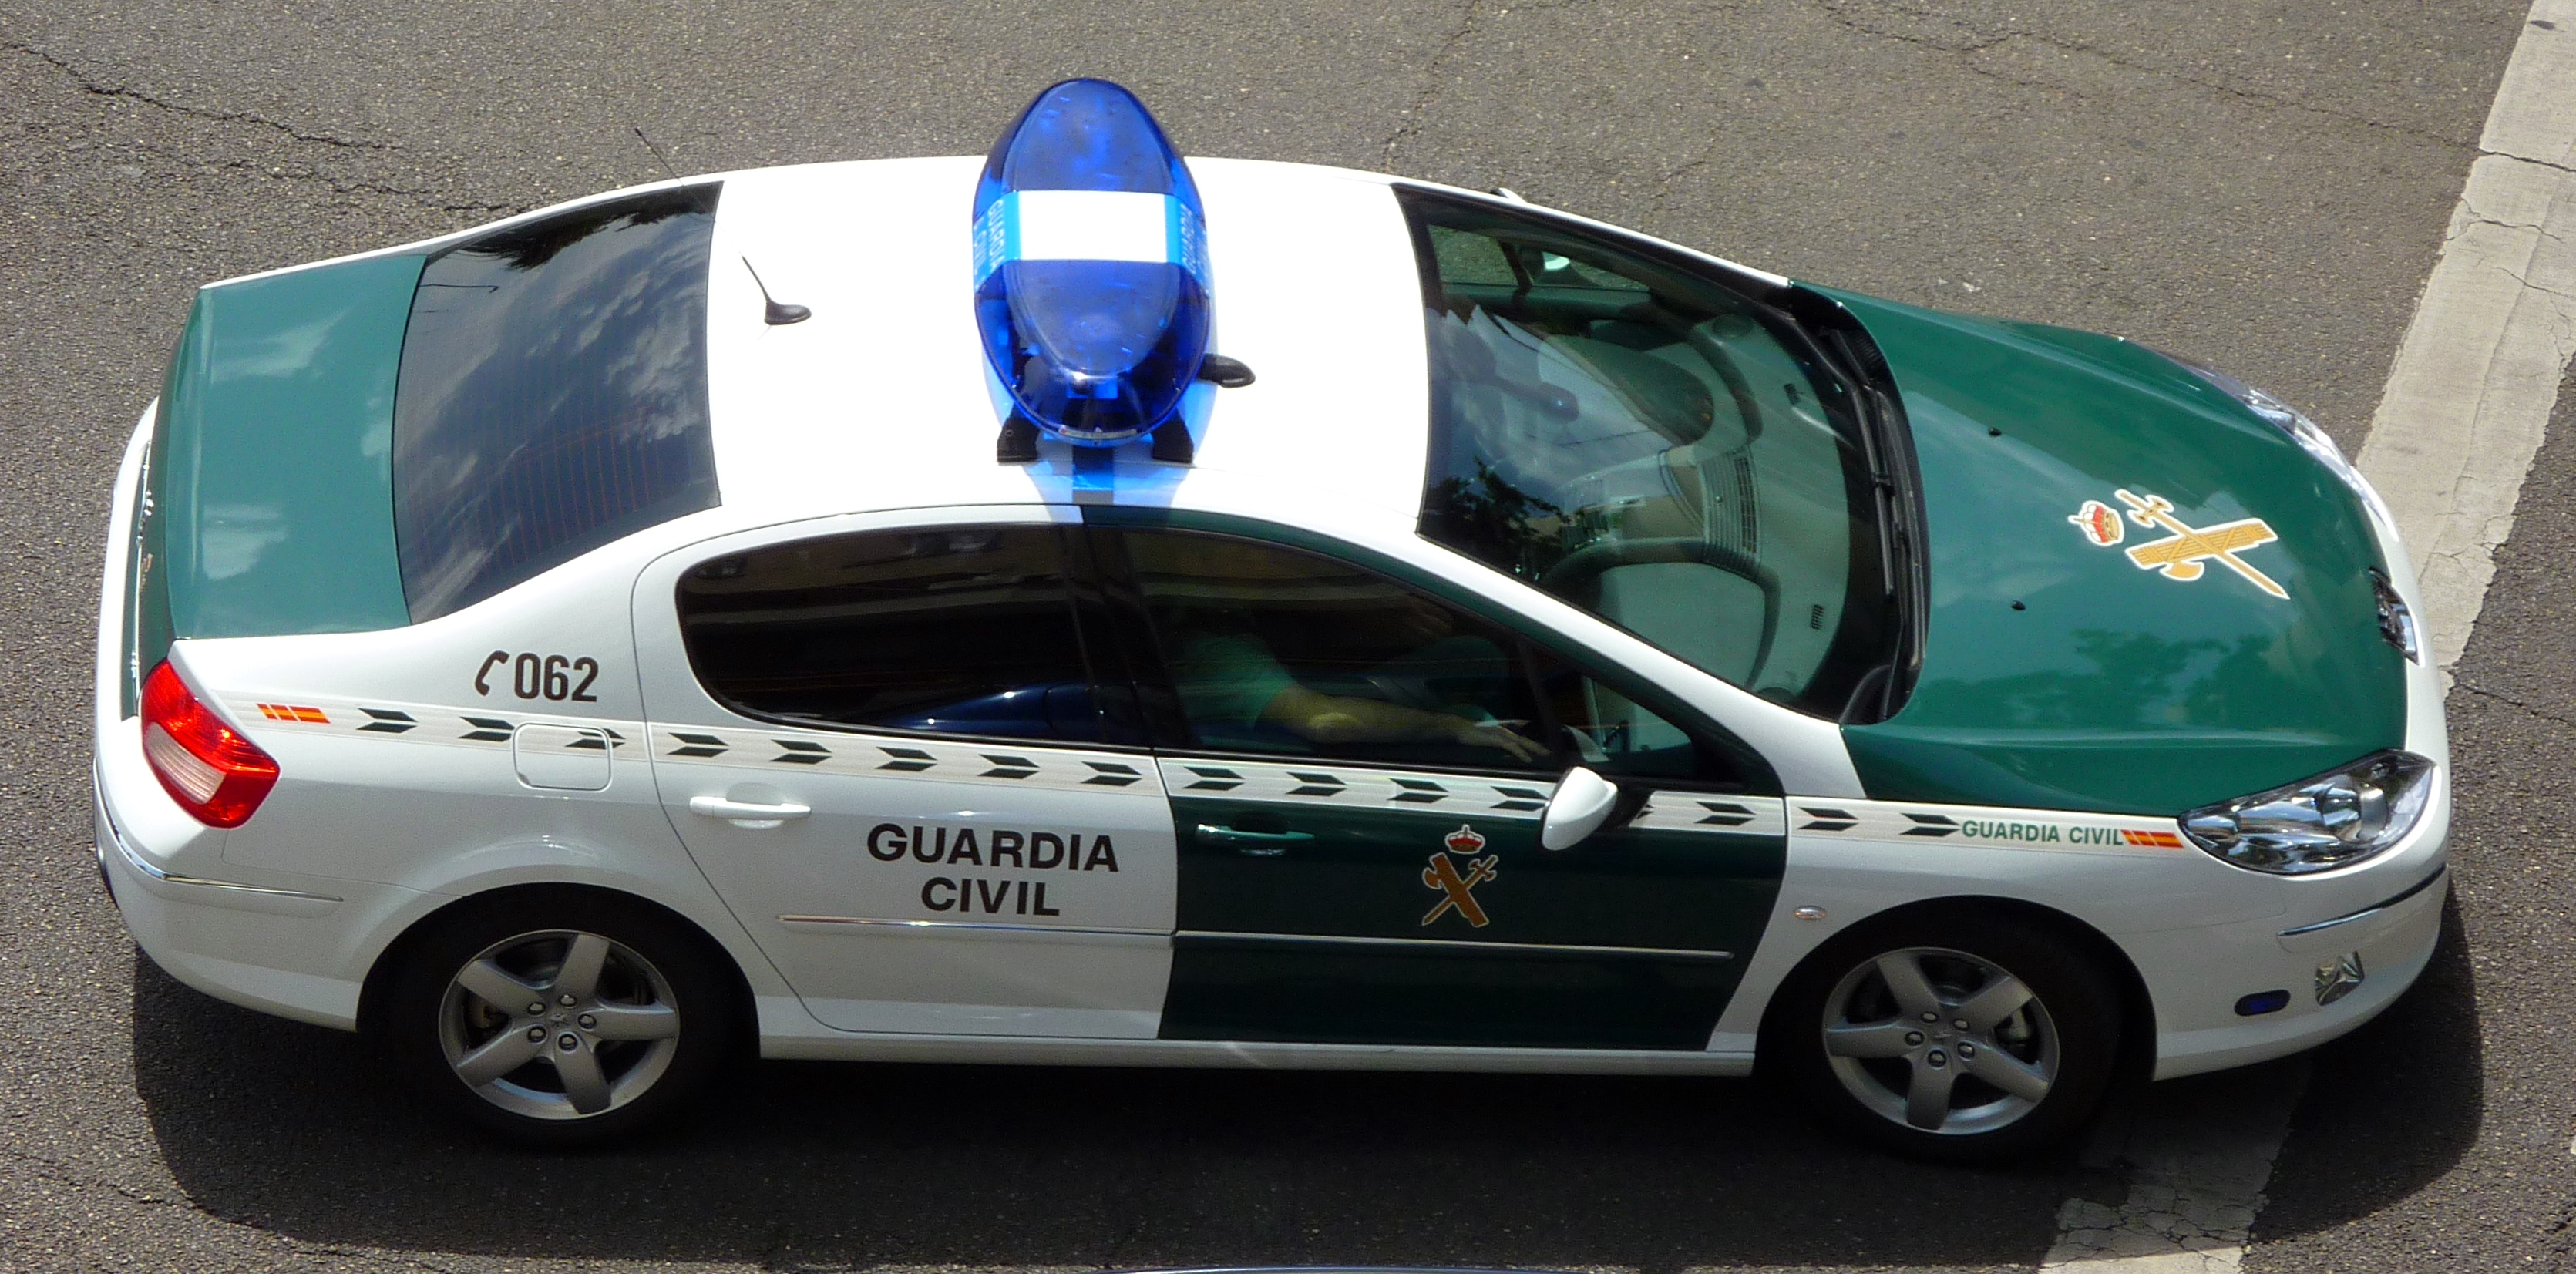 Peugeot 407 Guardia Civil